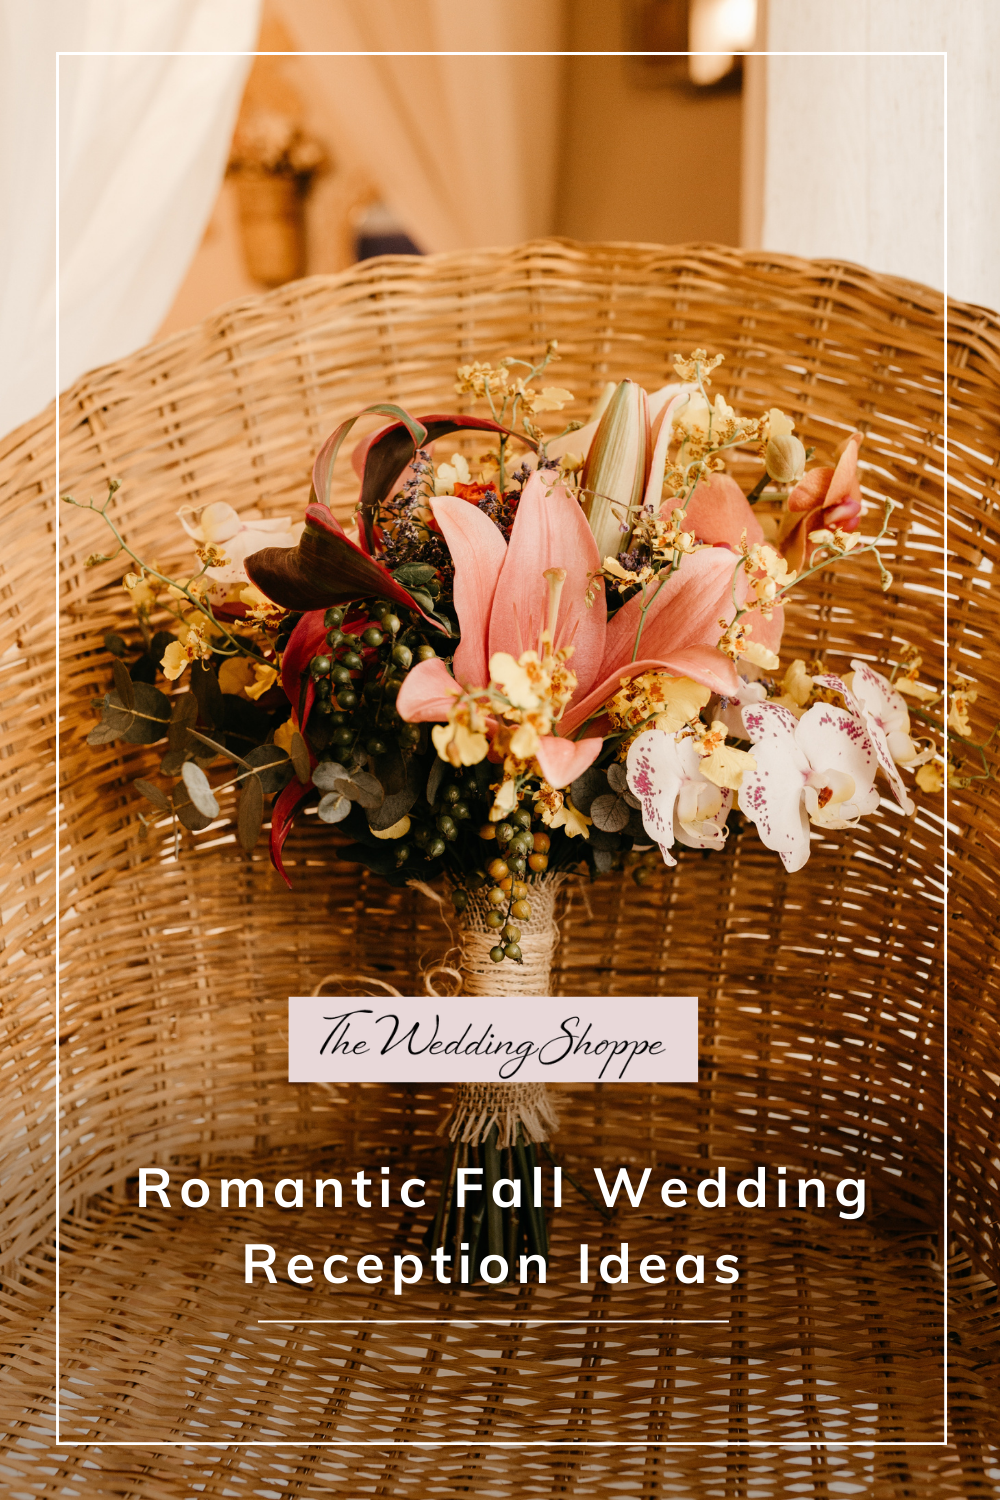 blog post graphic for "Romantic Fall Wedding Reception Ideas"